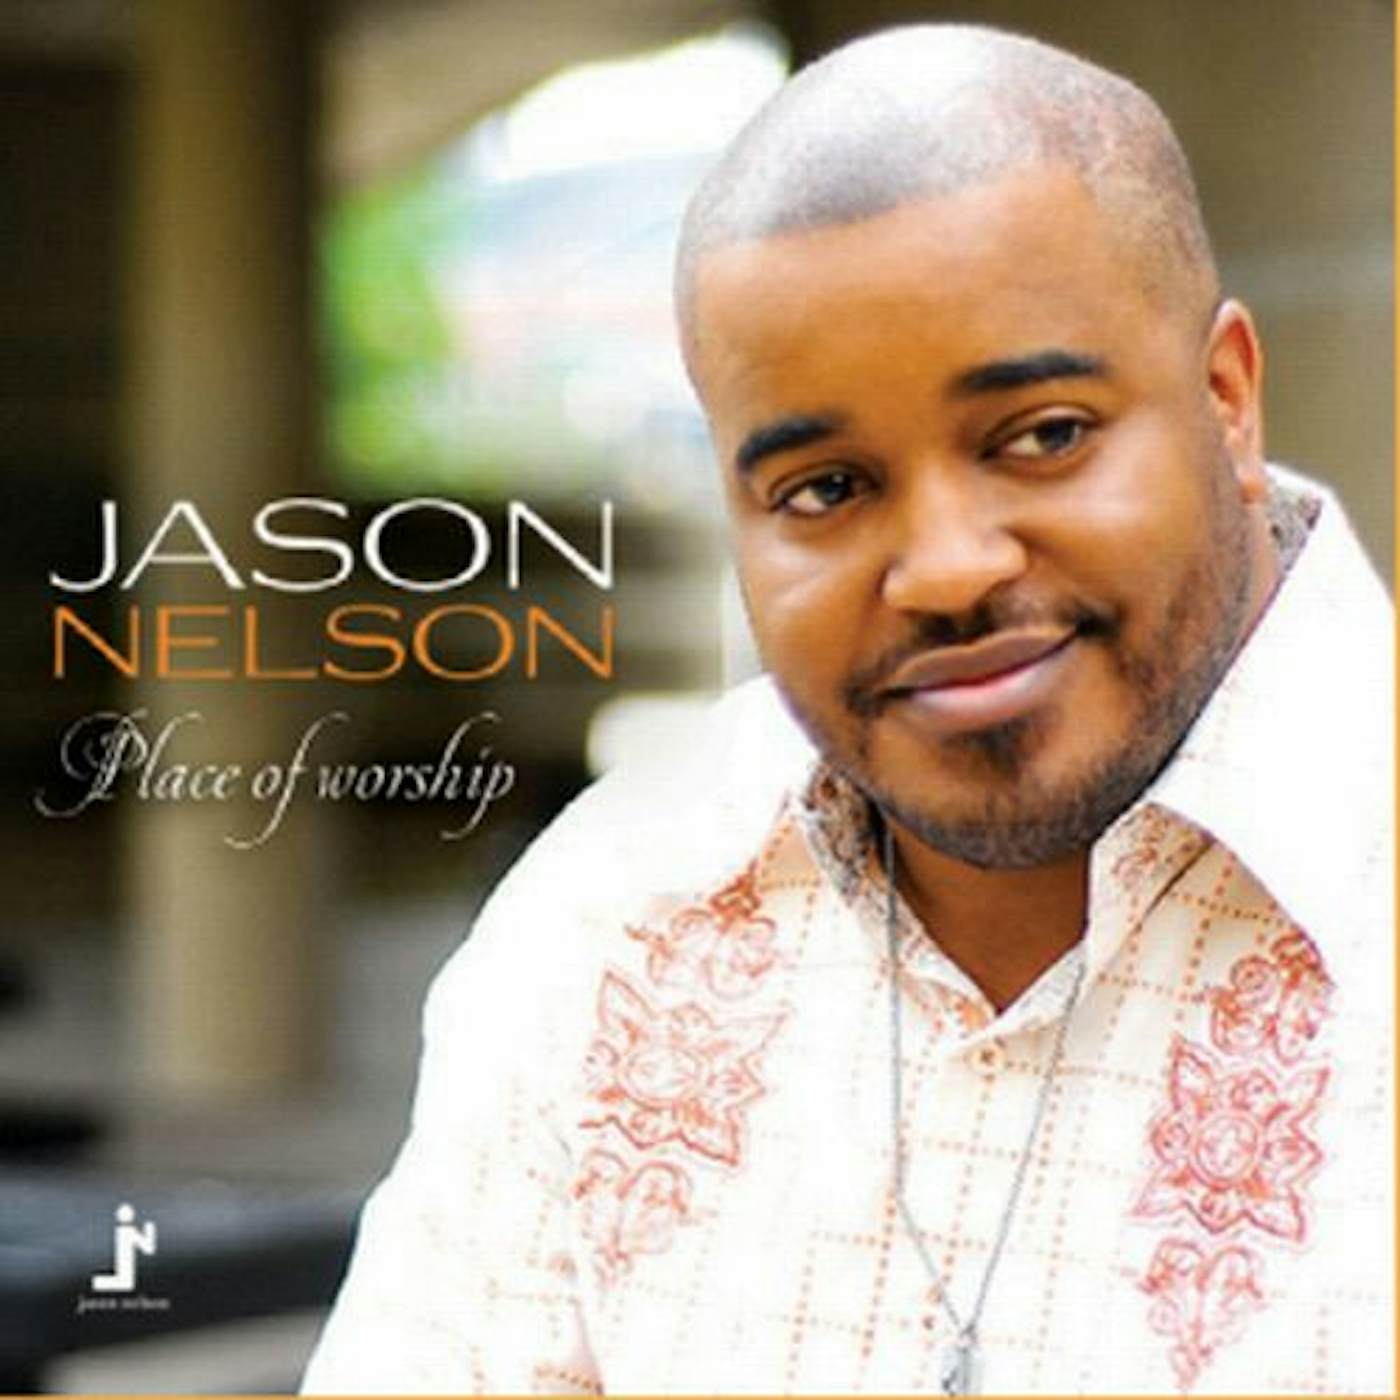 Jason Nelson PLACE OF WORSHIP CD